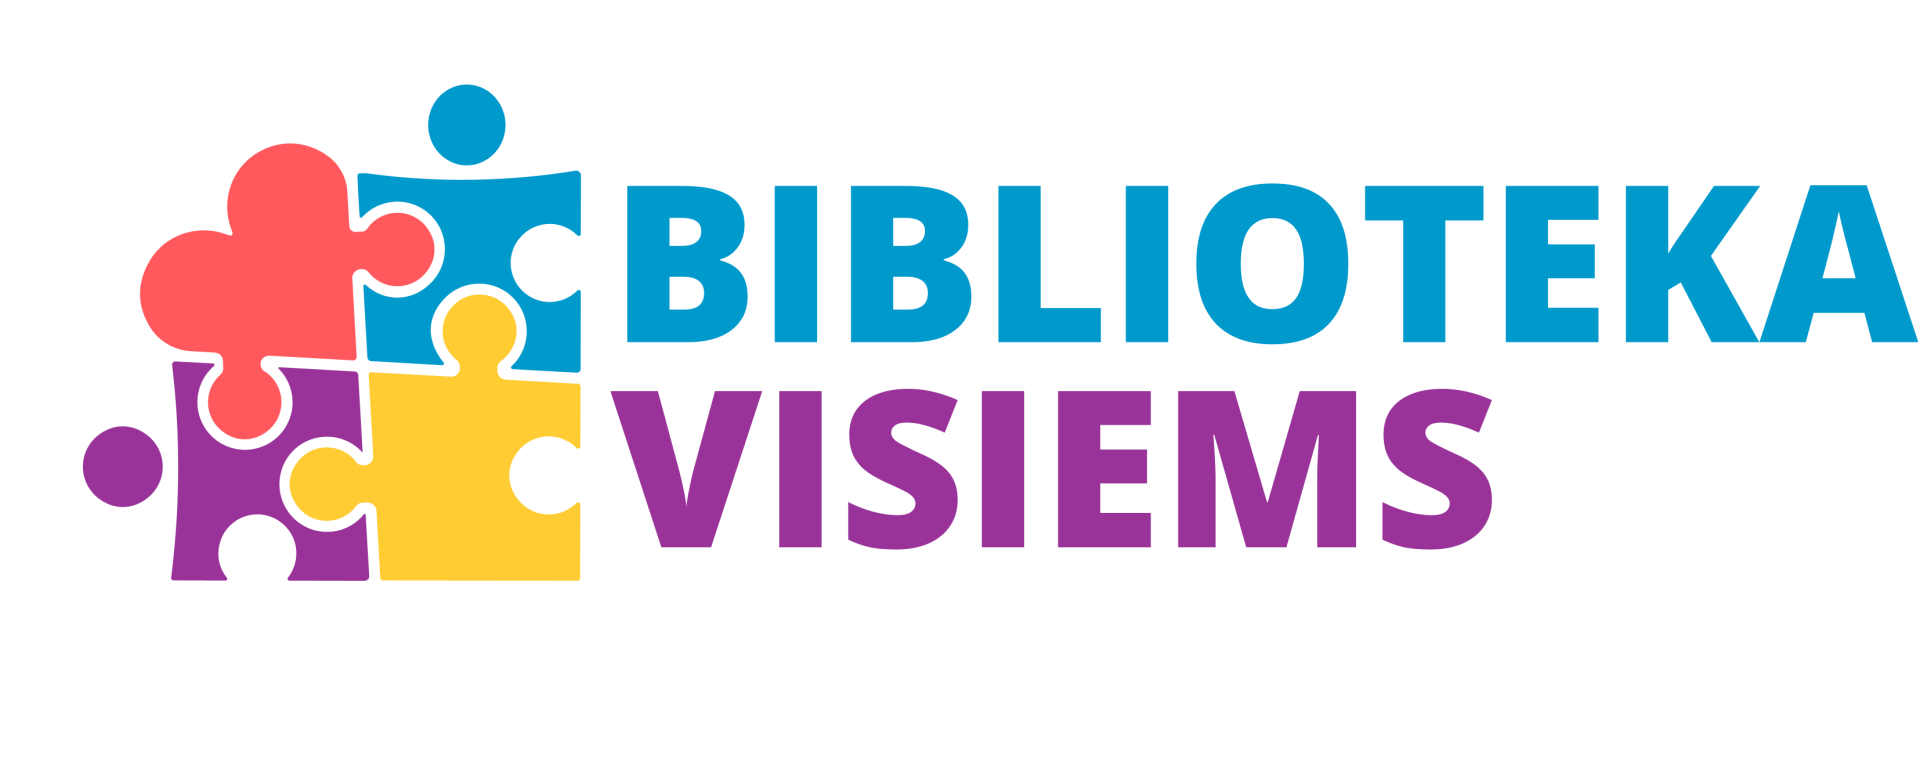 Biblioteka visiems logotipas